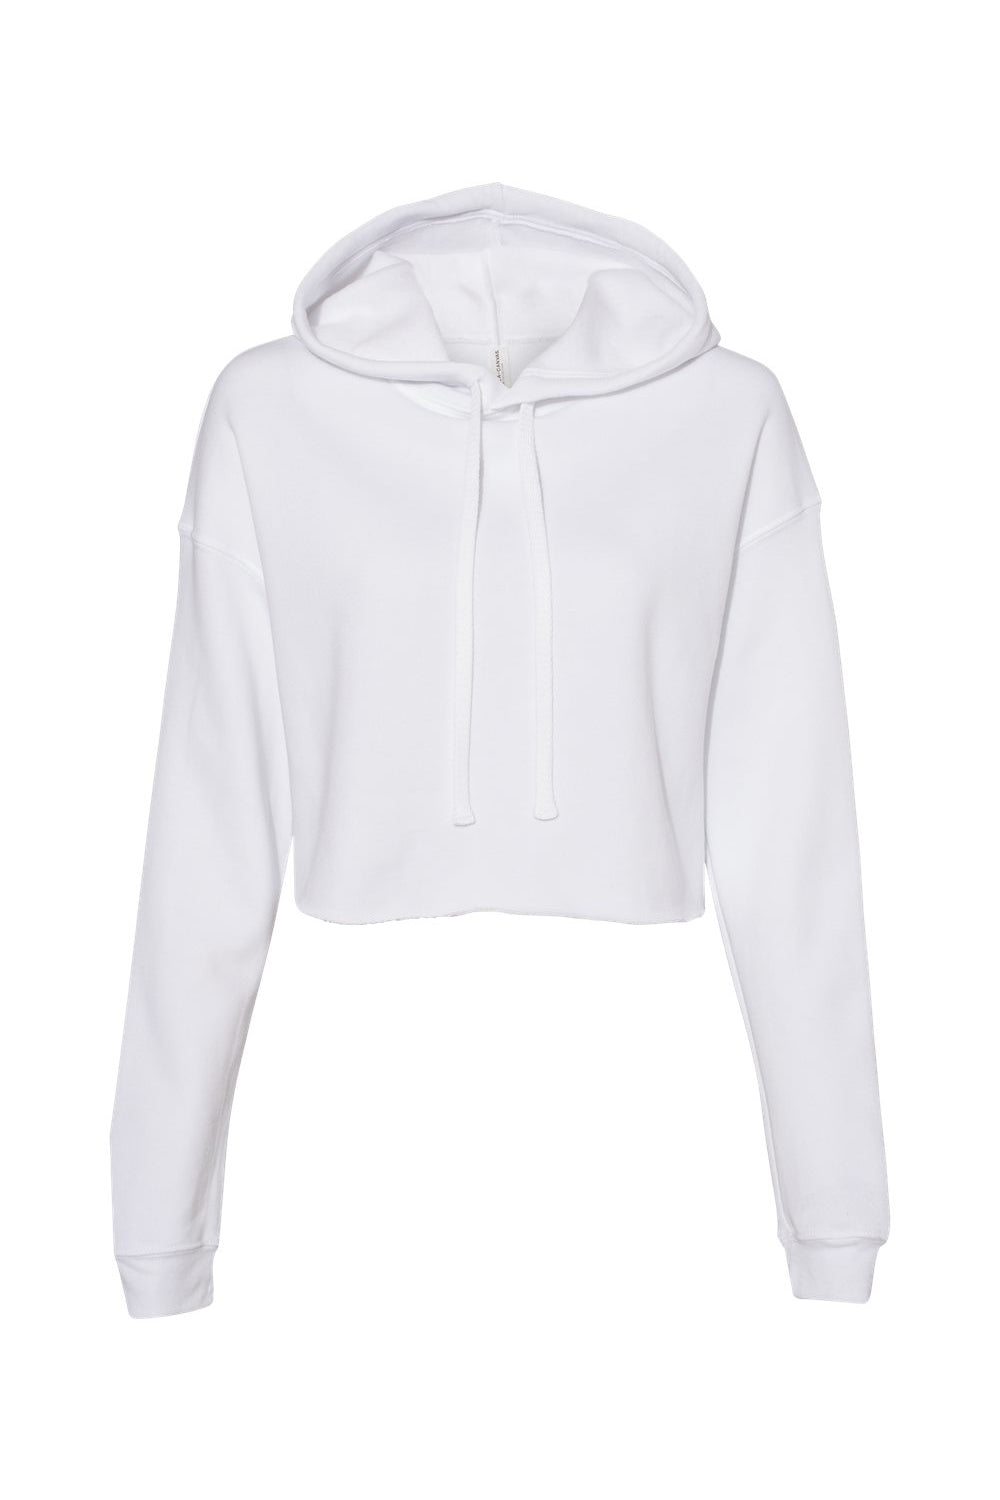 Bella + Canvas BC7502/B7502/7502 Womens Cropped Fleece Hooded Sweatshirt Hoodie White Flat Front